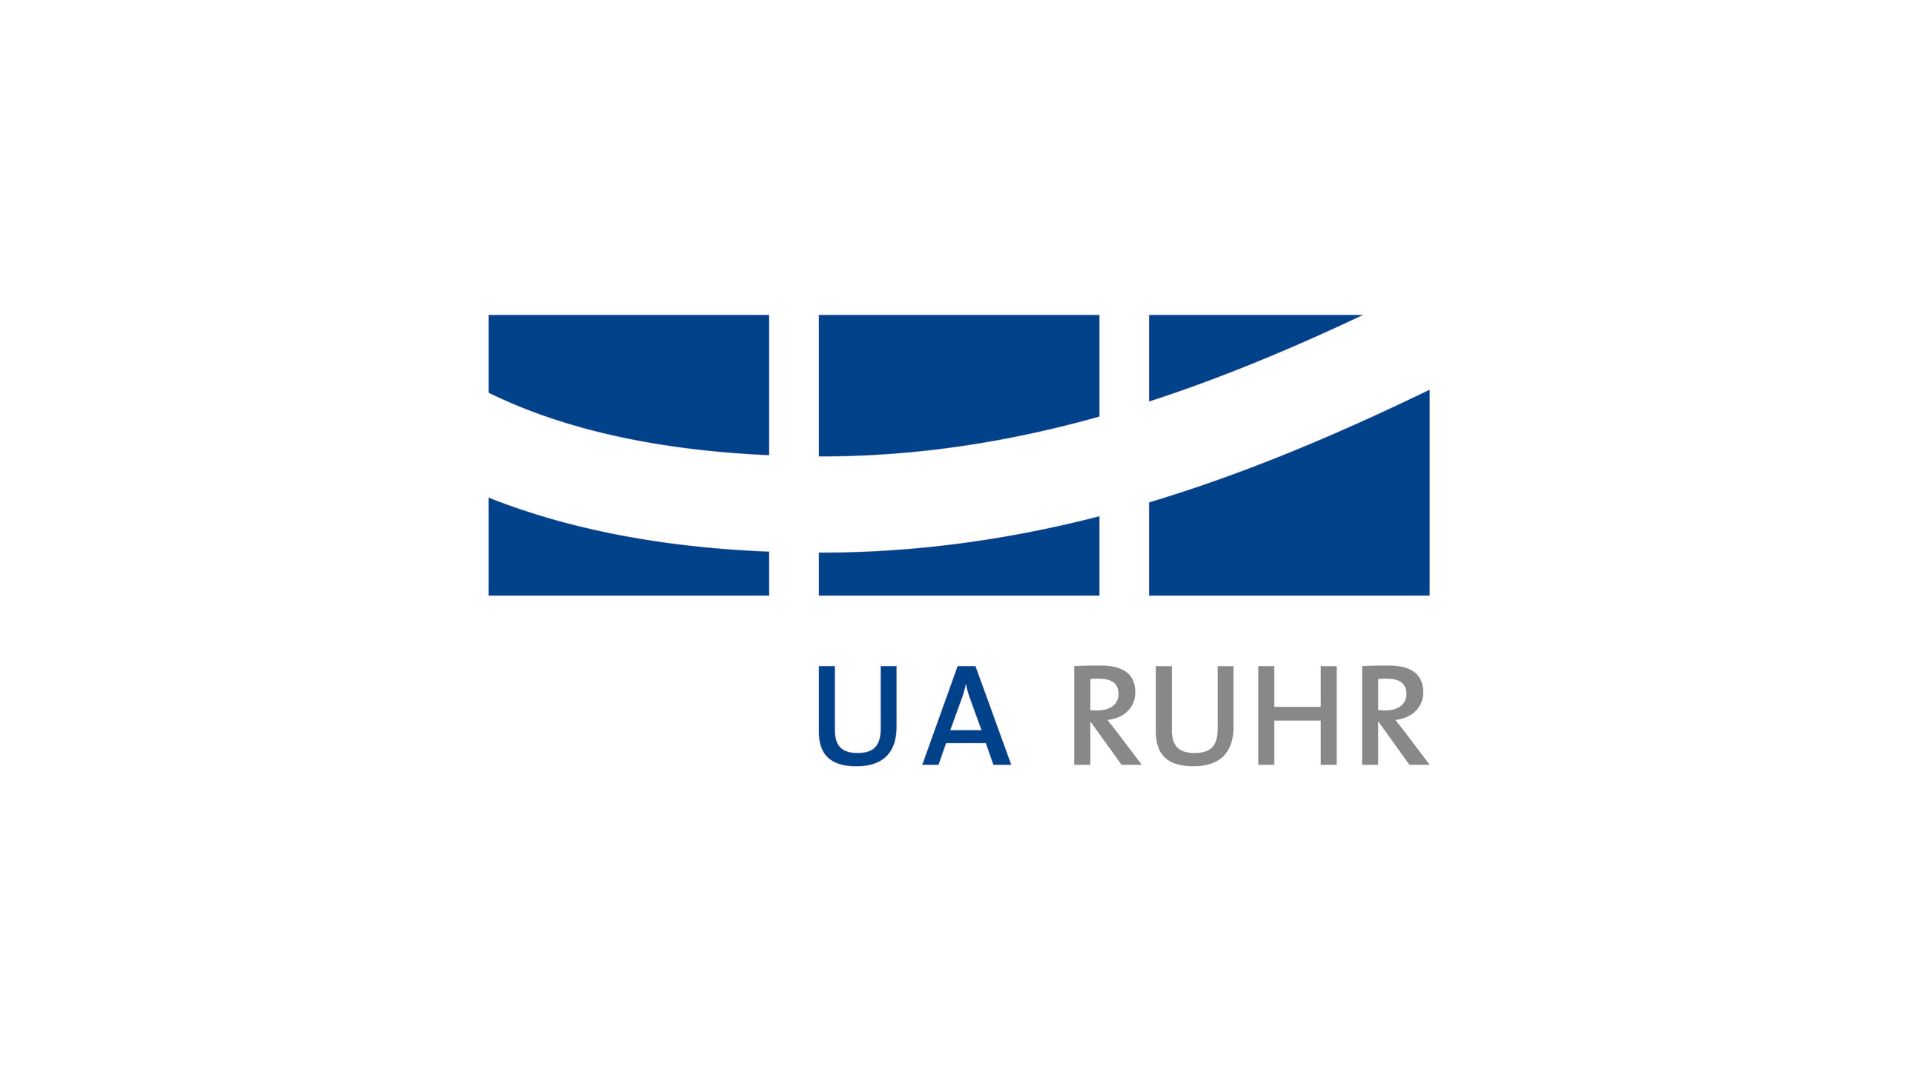 University Alliance Ruhr (UA Ruhr)